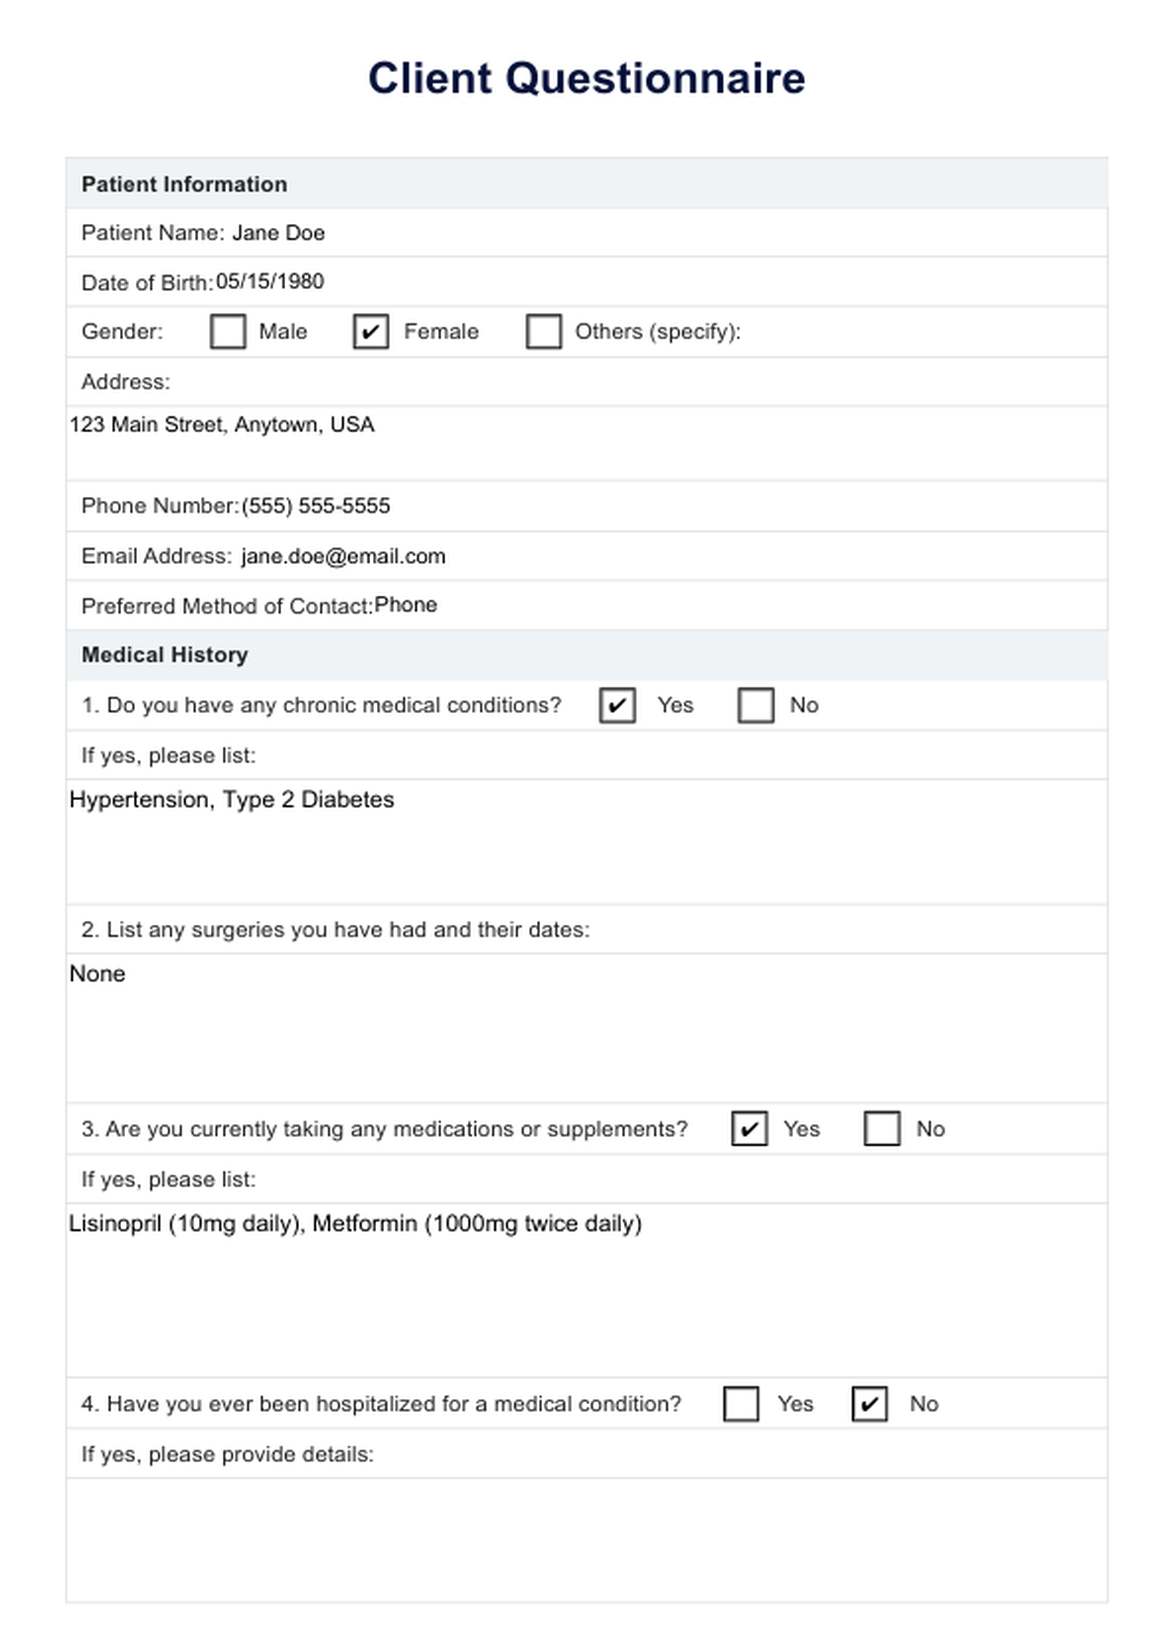 Client Questionnaire Template PDF Example